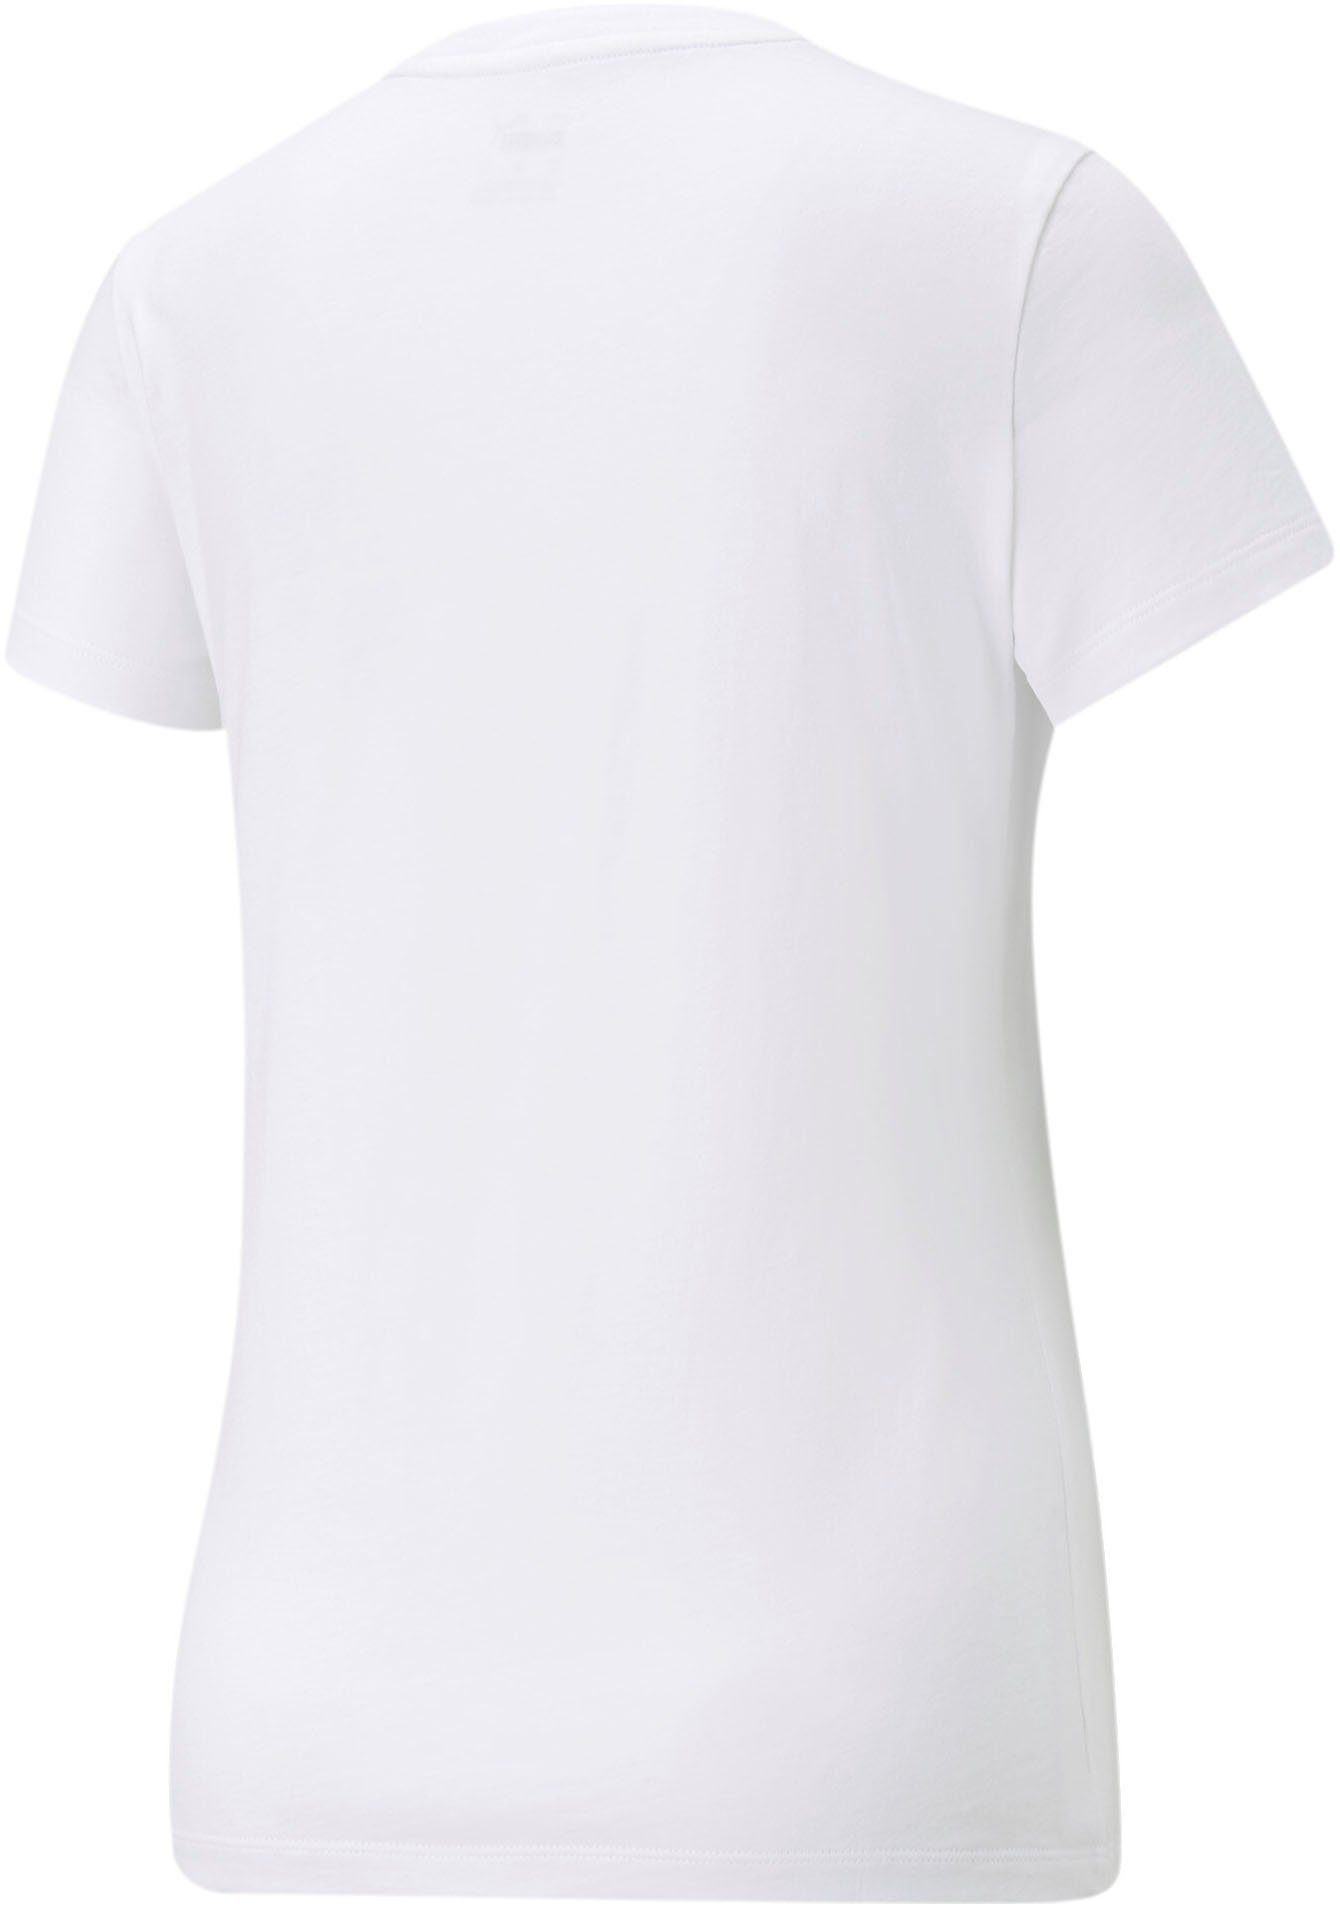 ESS+ TEE Puma White-silver T-Shirt METALLIC metallic LOGO PUMA